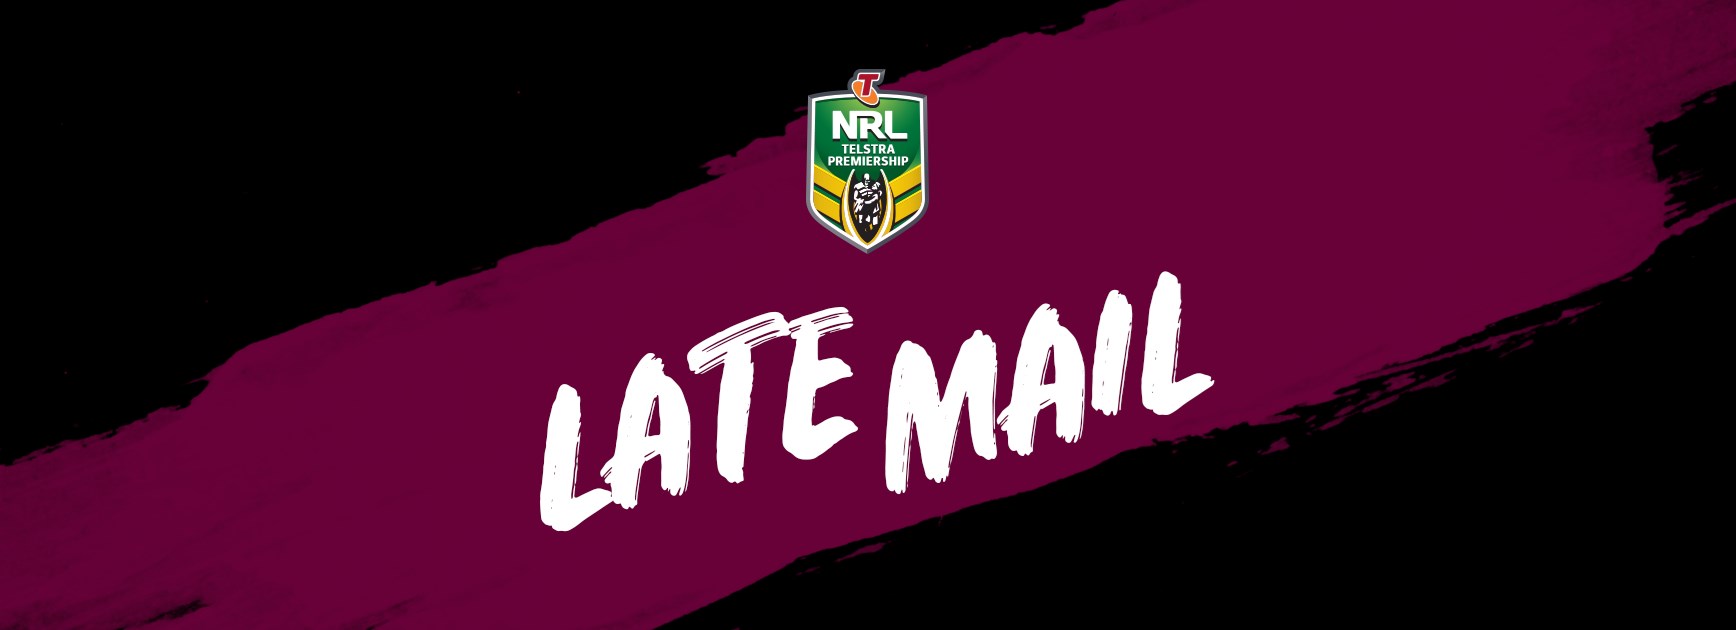 NRL Late Mail - Round 18